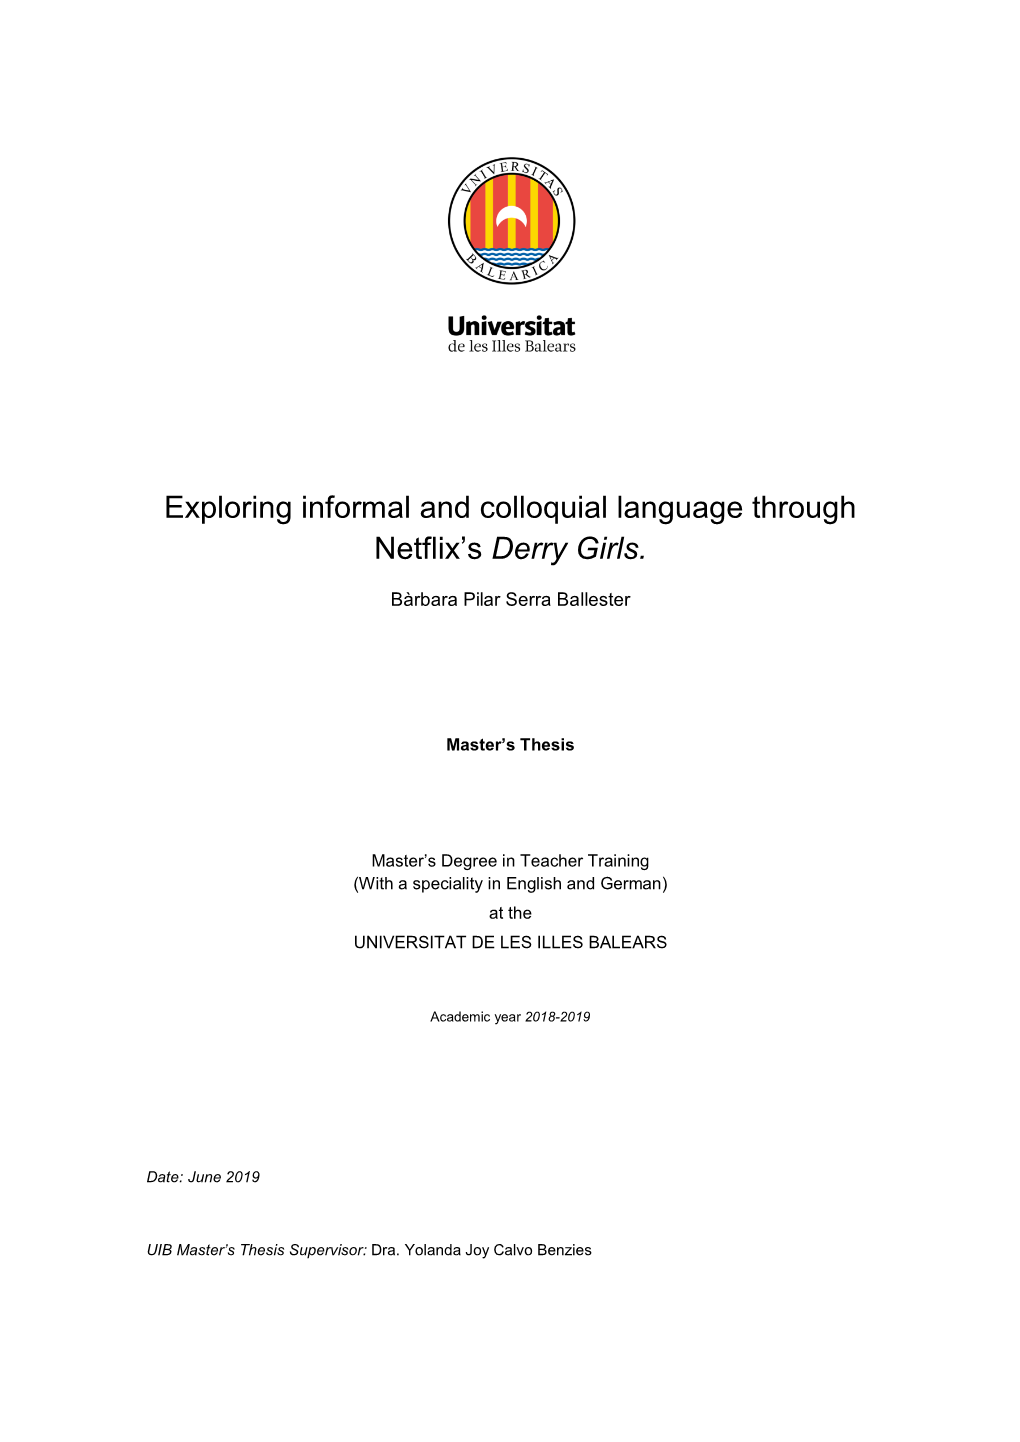 Exploring Informal and Colloquial Language Through Netflix's Derry Girls